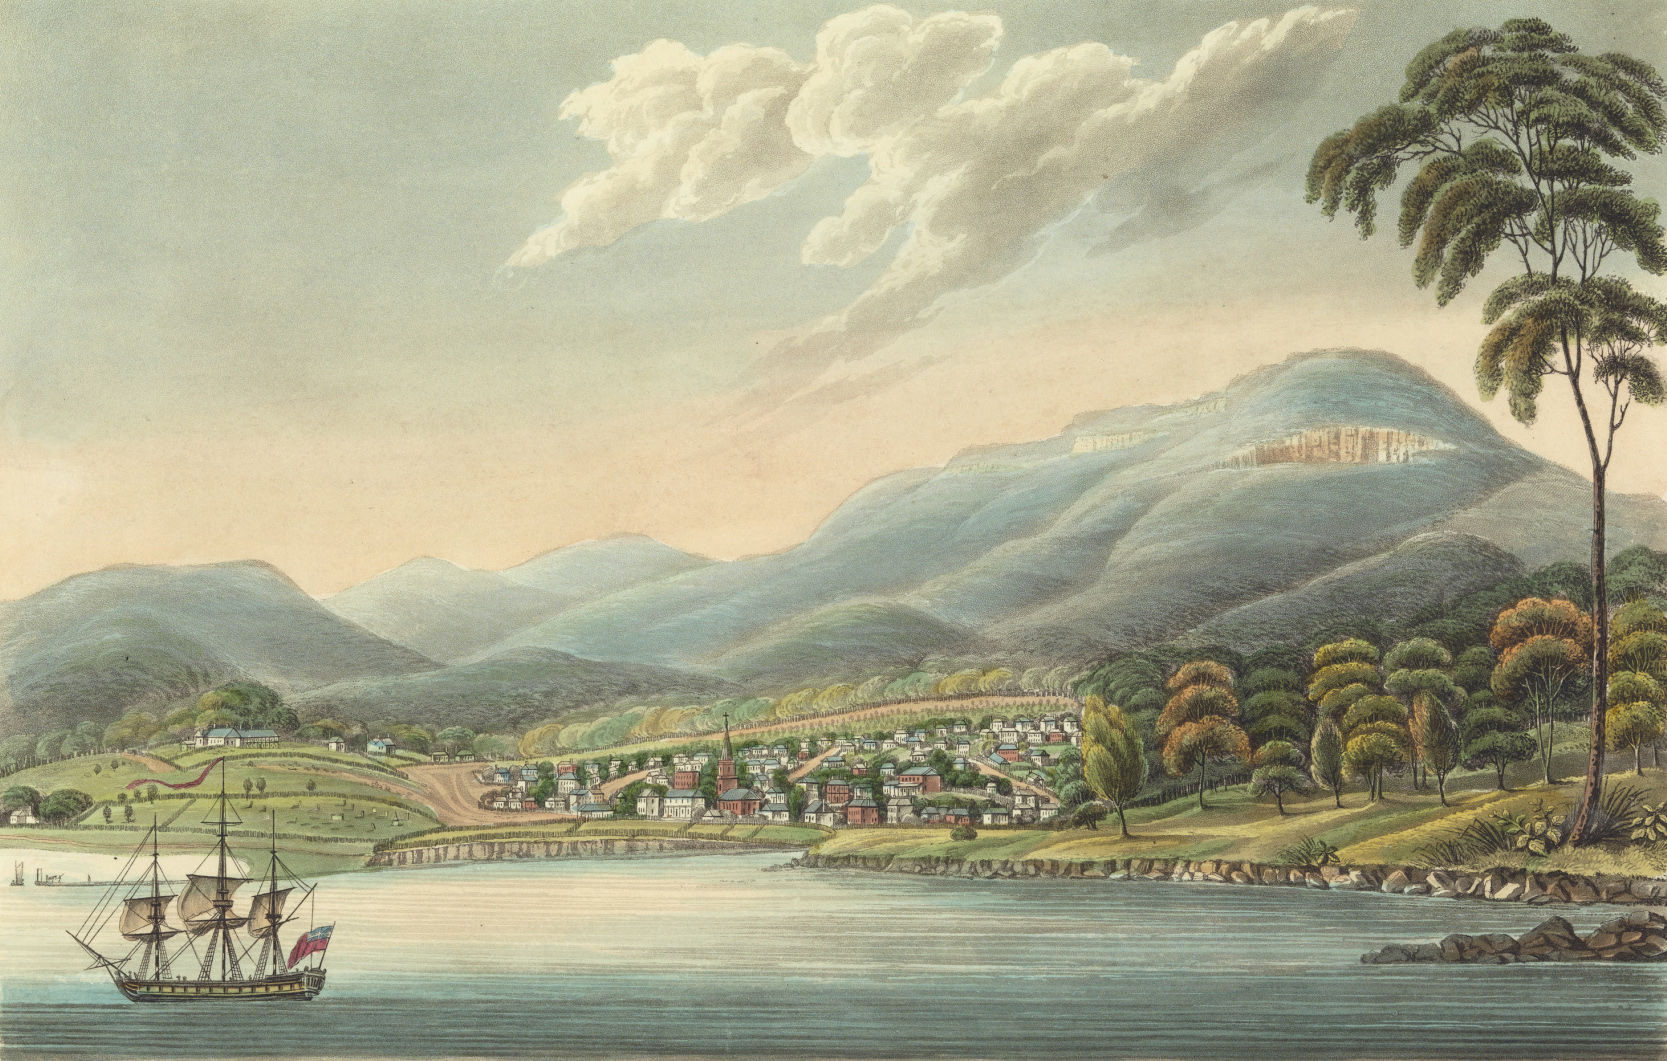 View of Hobart Town, Van Diemen’s Land by Joseph Lycett, 1824.